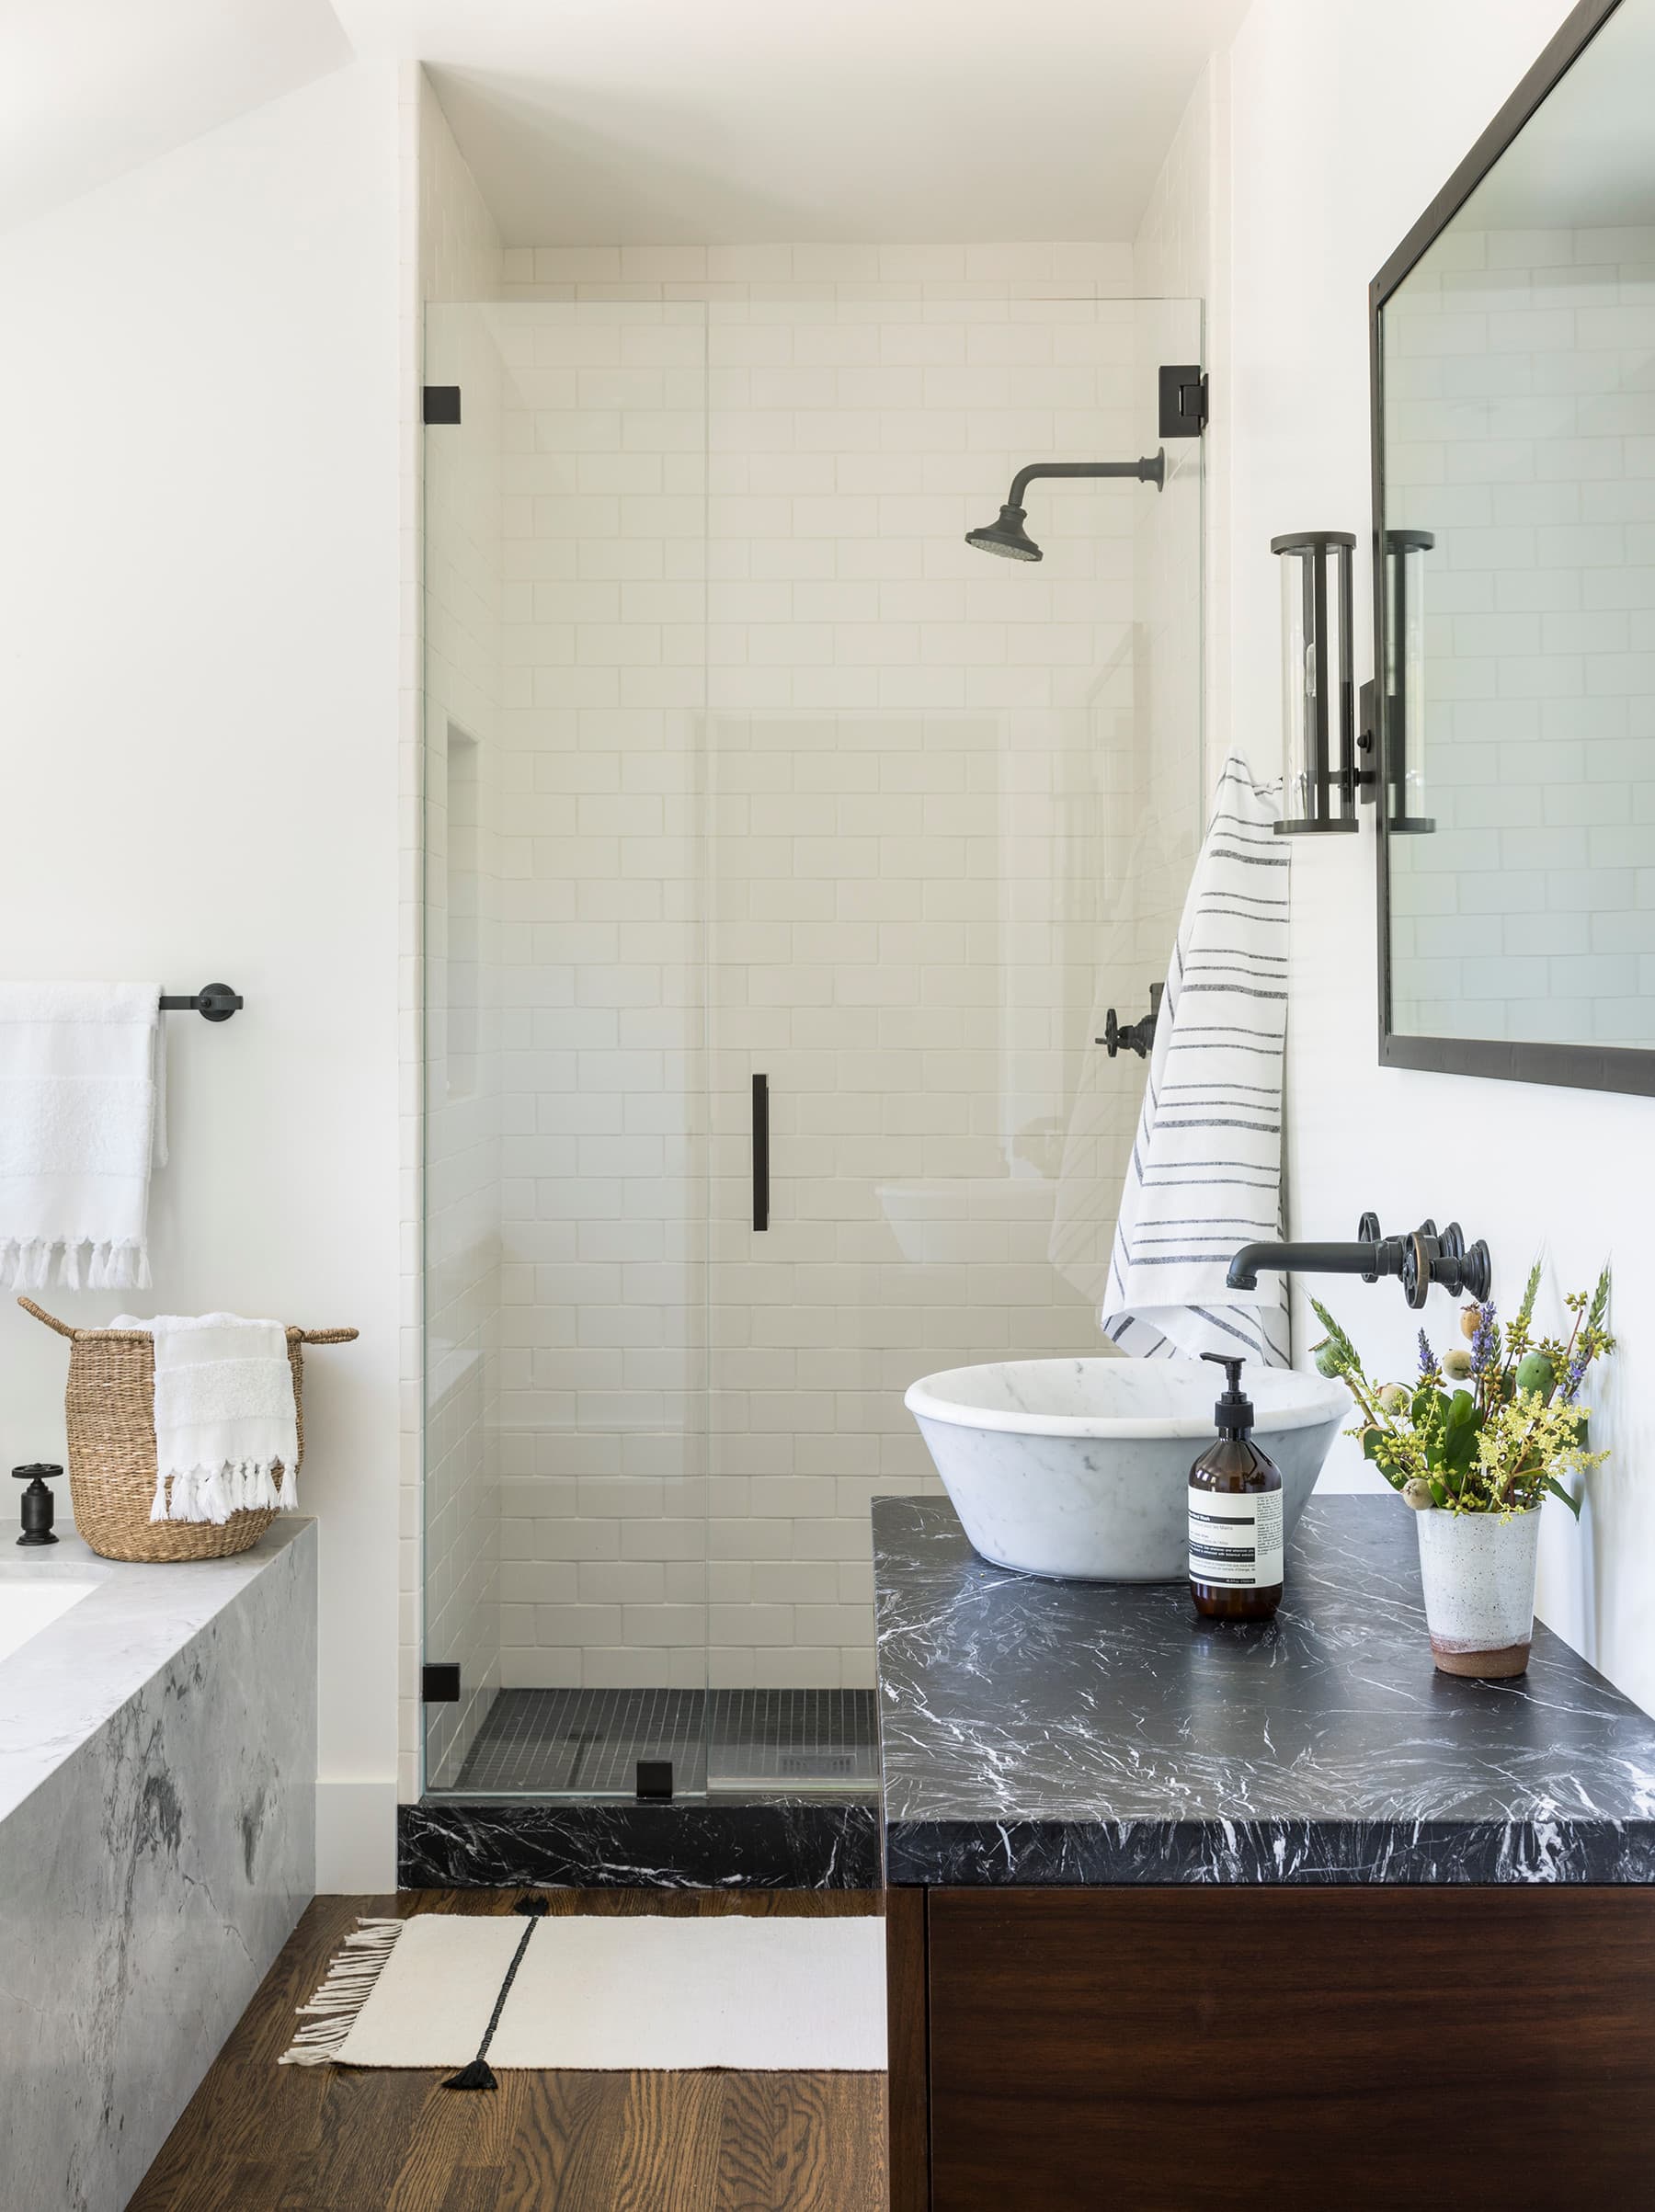 California Casual Design home tour in Hillsborough featuring modern bathroom with marble